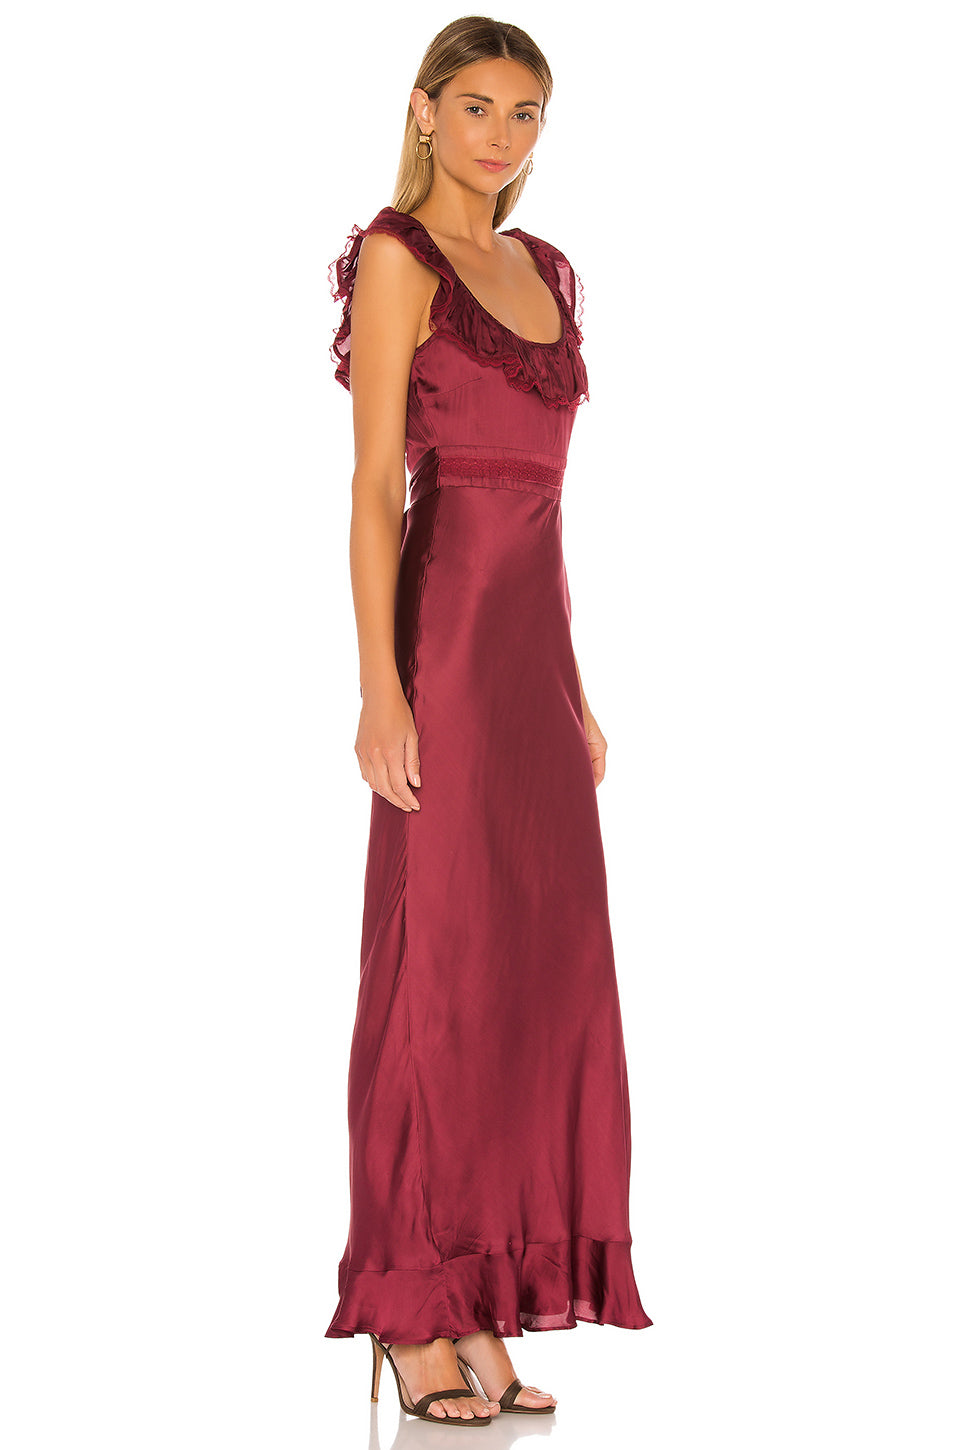 Vanna Dress in CABERNET RED